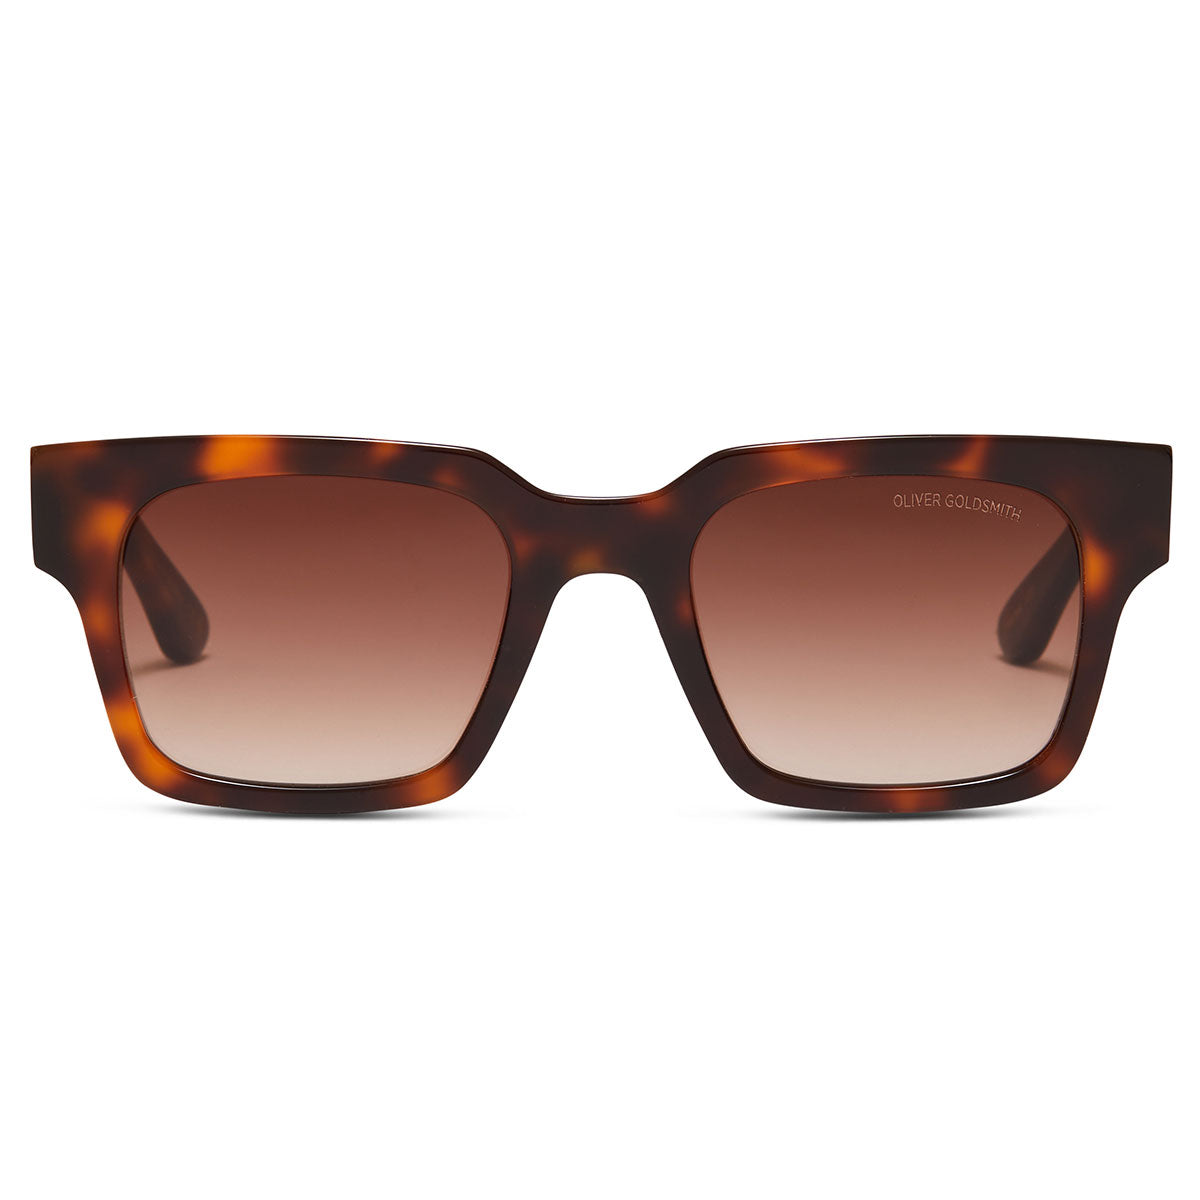 Winston Sunglasses with Earth Tortoise acetate frame